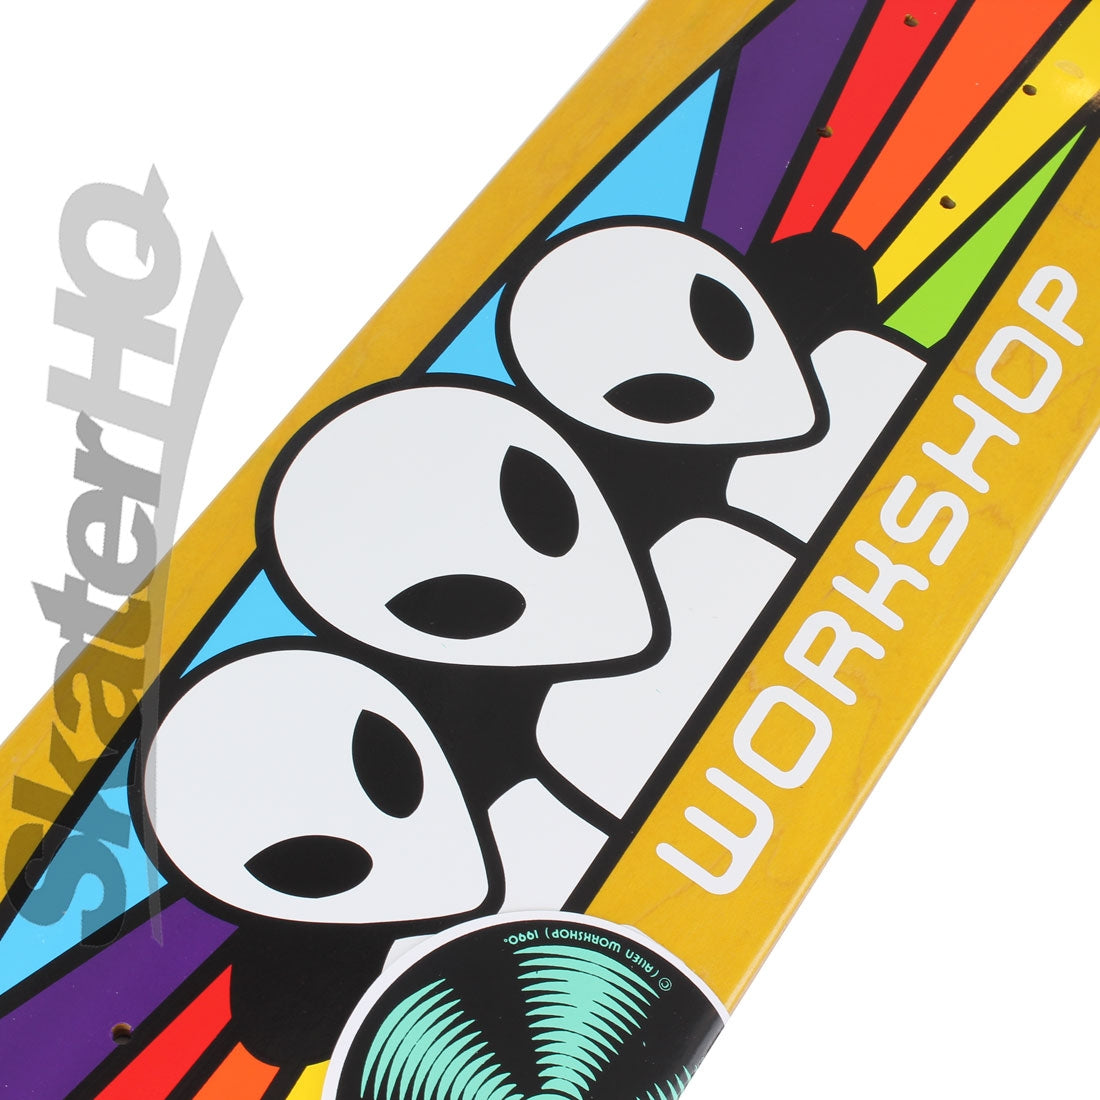 Alien Workshop Spectrum Mini 7.25 Deck - Yellow Skateboard Decks Modern Street